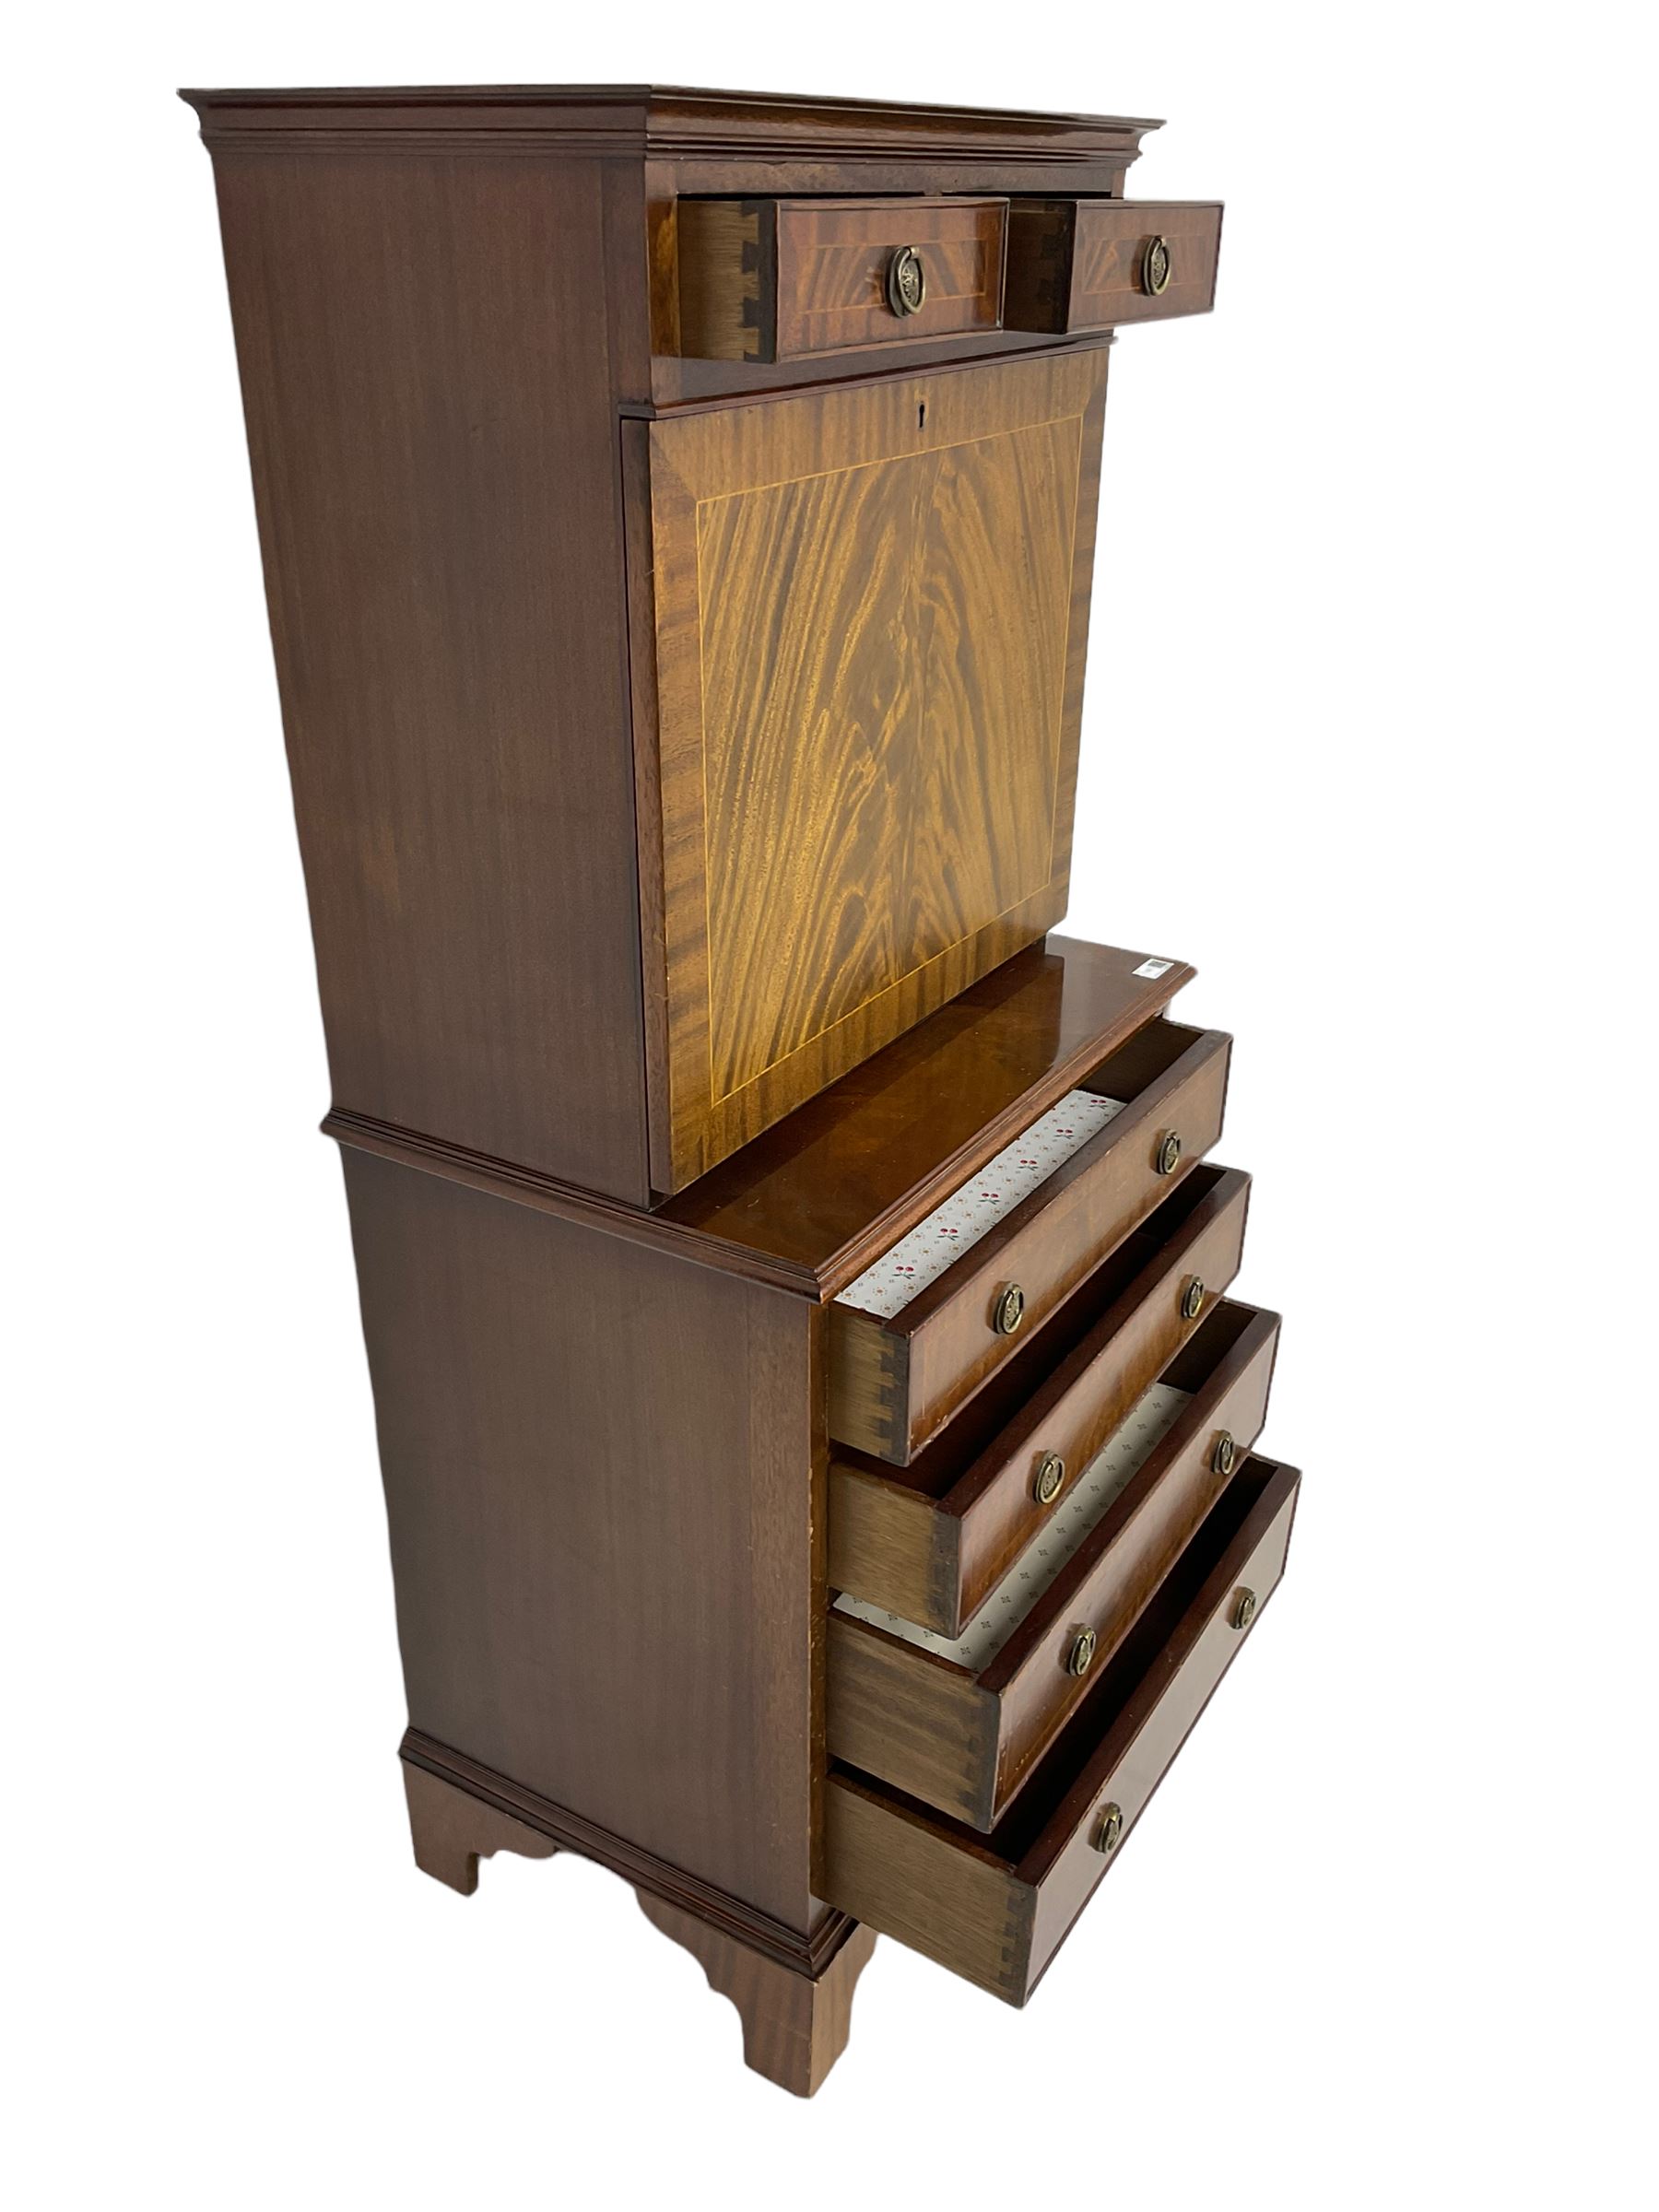 Shaw of London - mahogany secretaire chest - Image 6 of 8